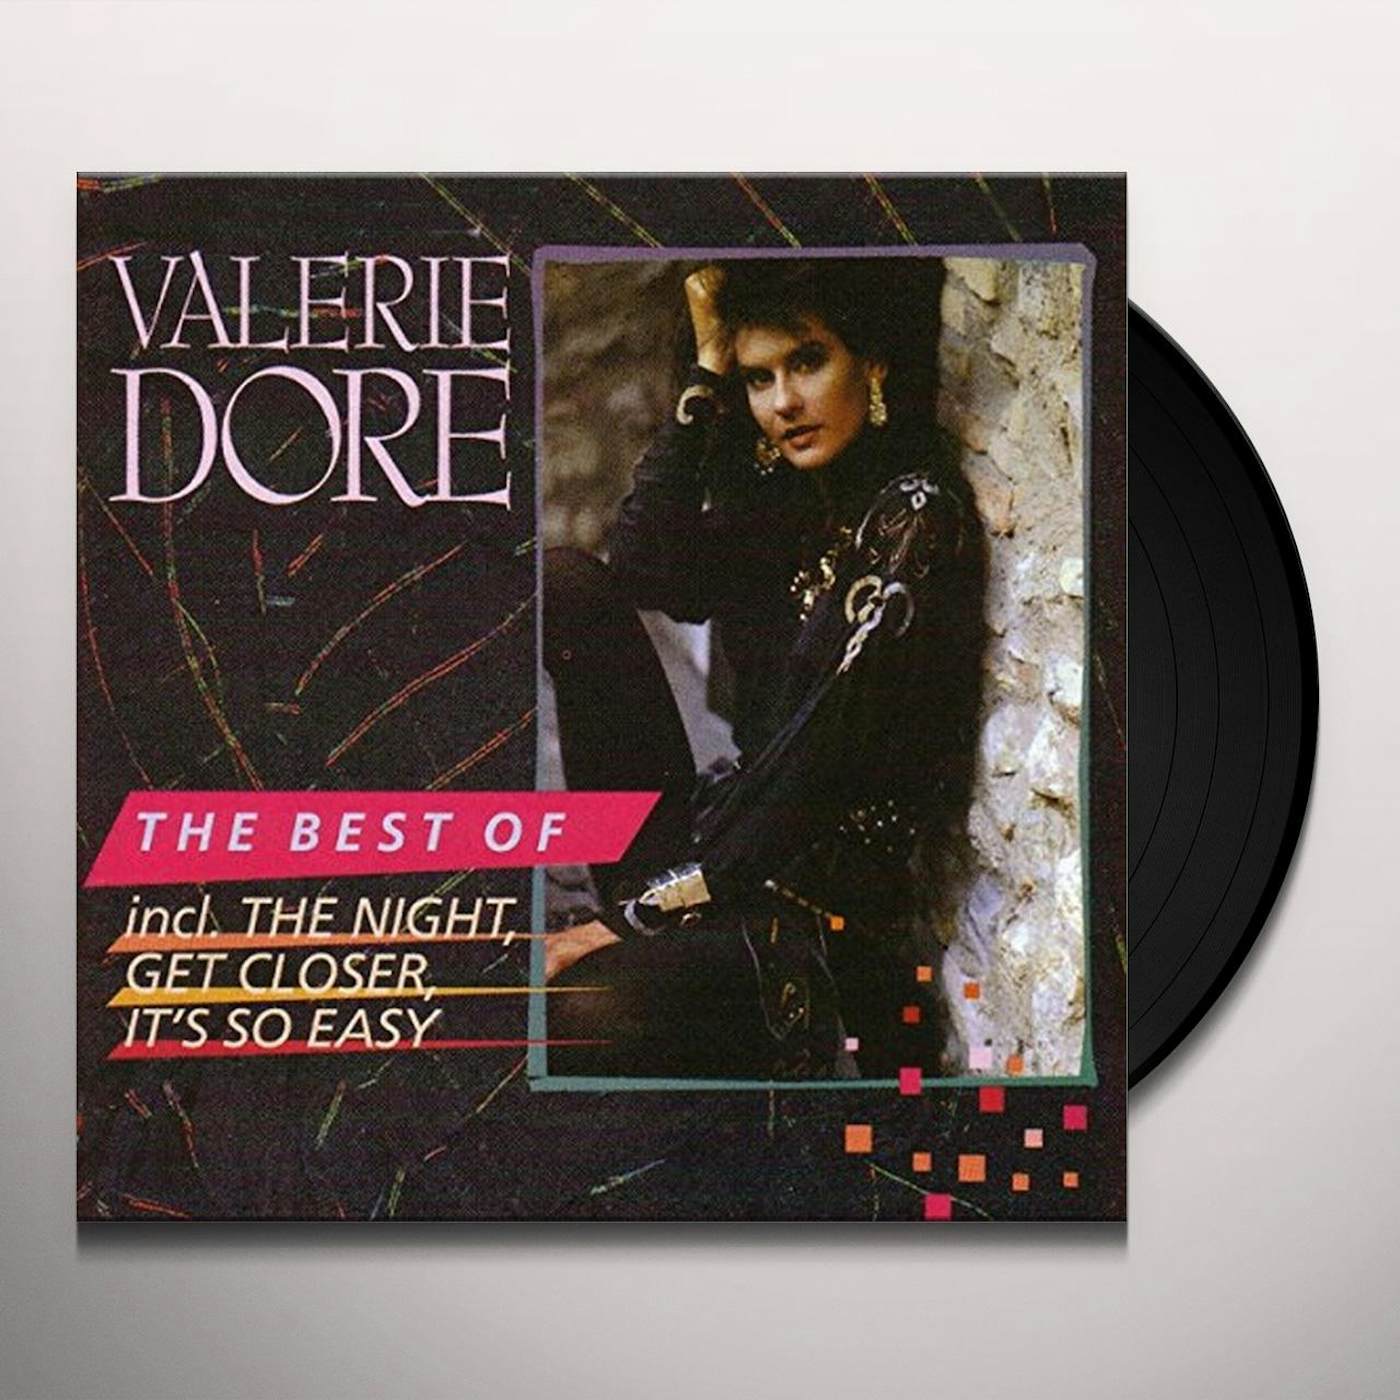 BEST OF VALERIE DORE Vinyl Record